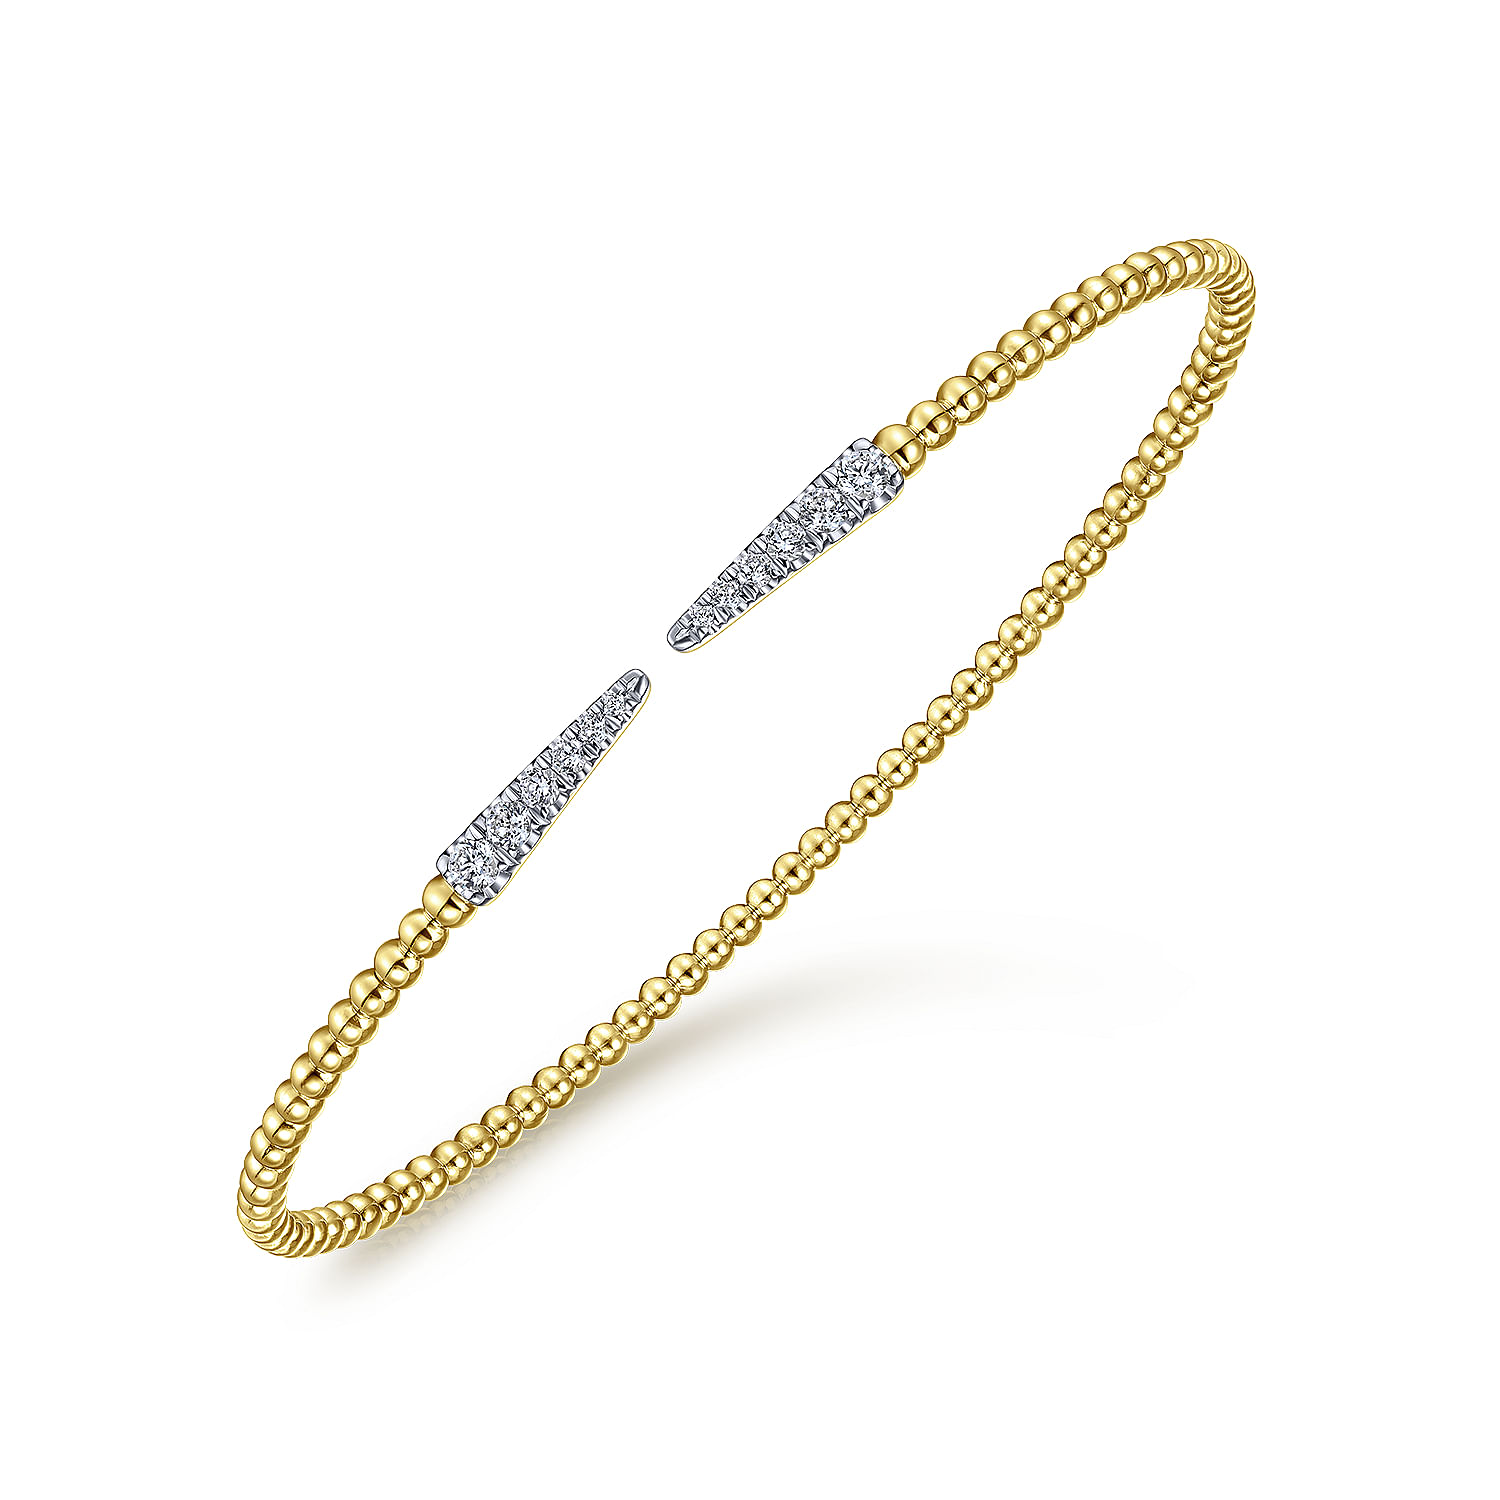 Split 14K Yellow Gold Bujukan Bead Cuff Bracelet with Diamond Pavé Spikes